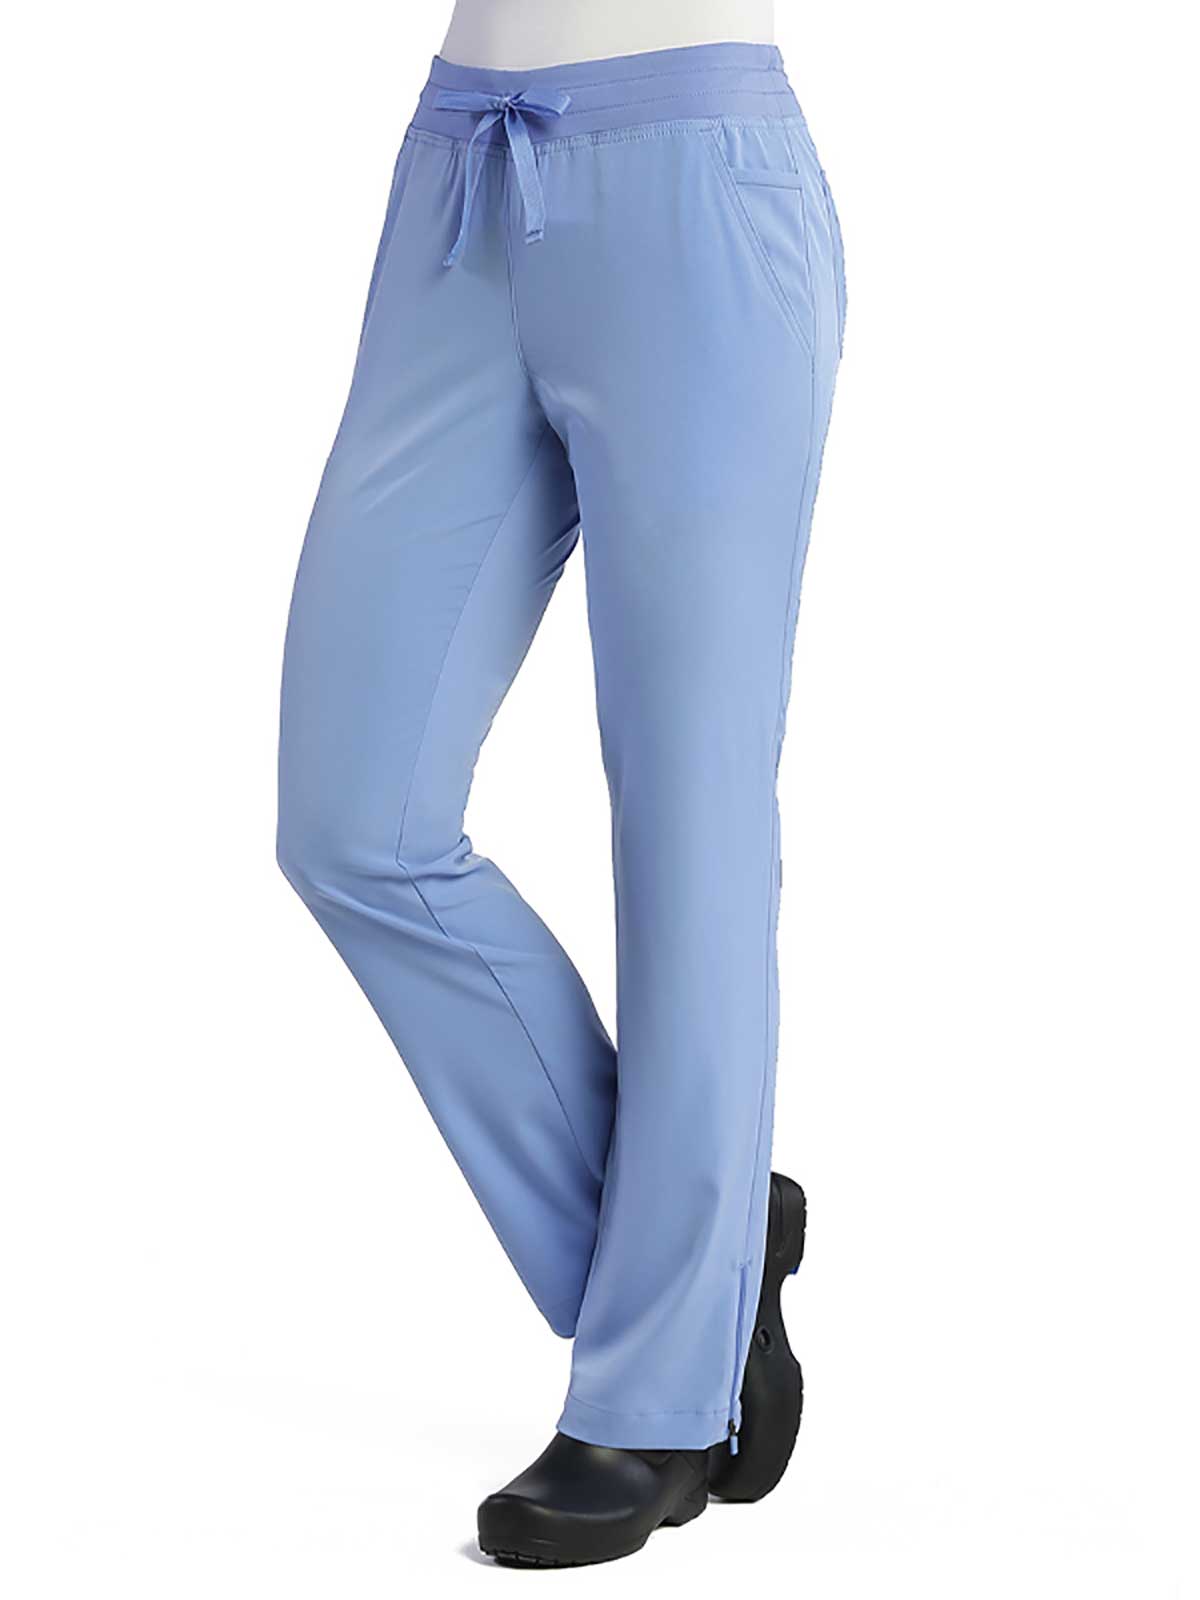 Women's Adjustable Flare Yoga Pant [1]